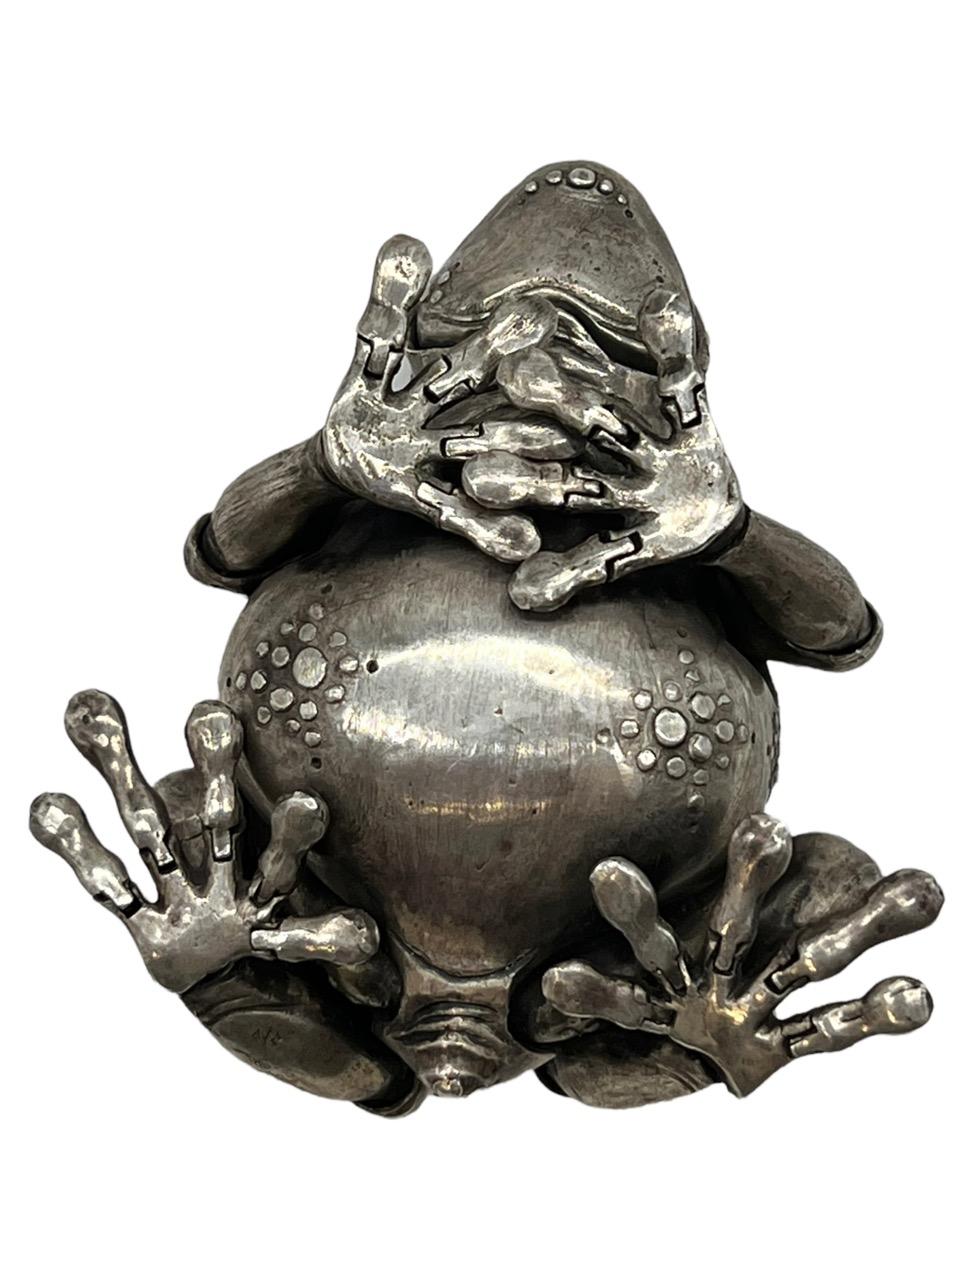 Oleg Konstantinov Fully Articulated Frog Made of Sterling Silver For Sale 9